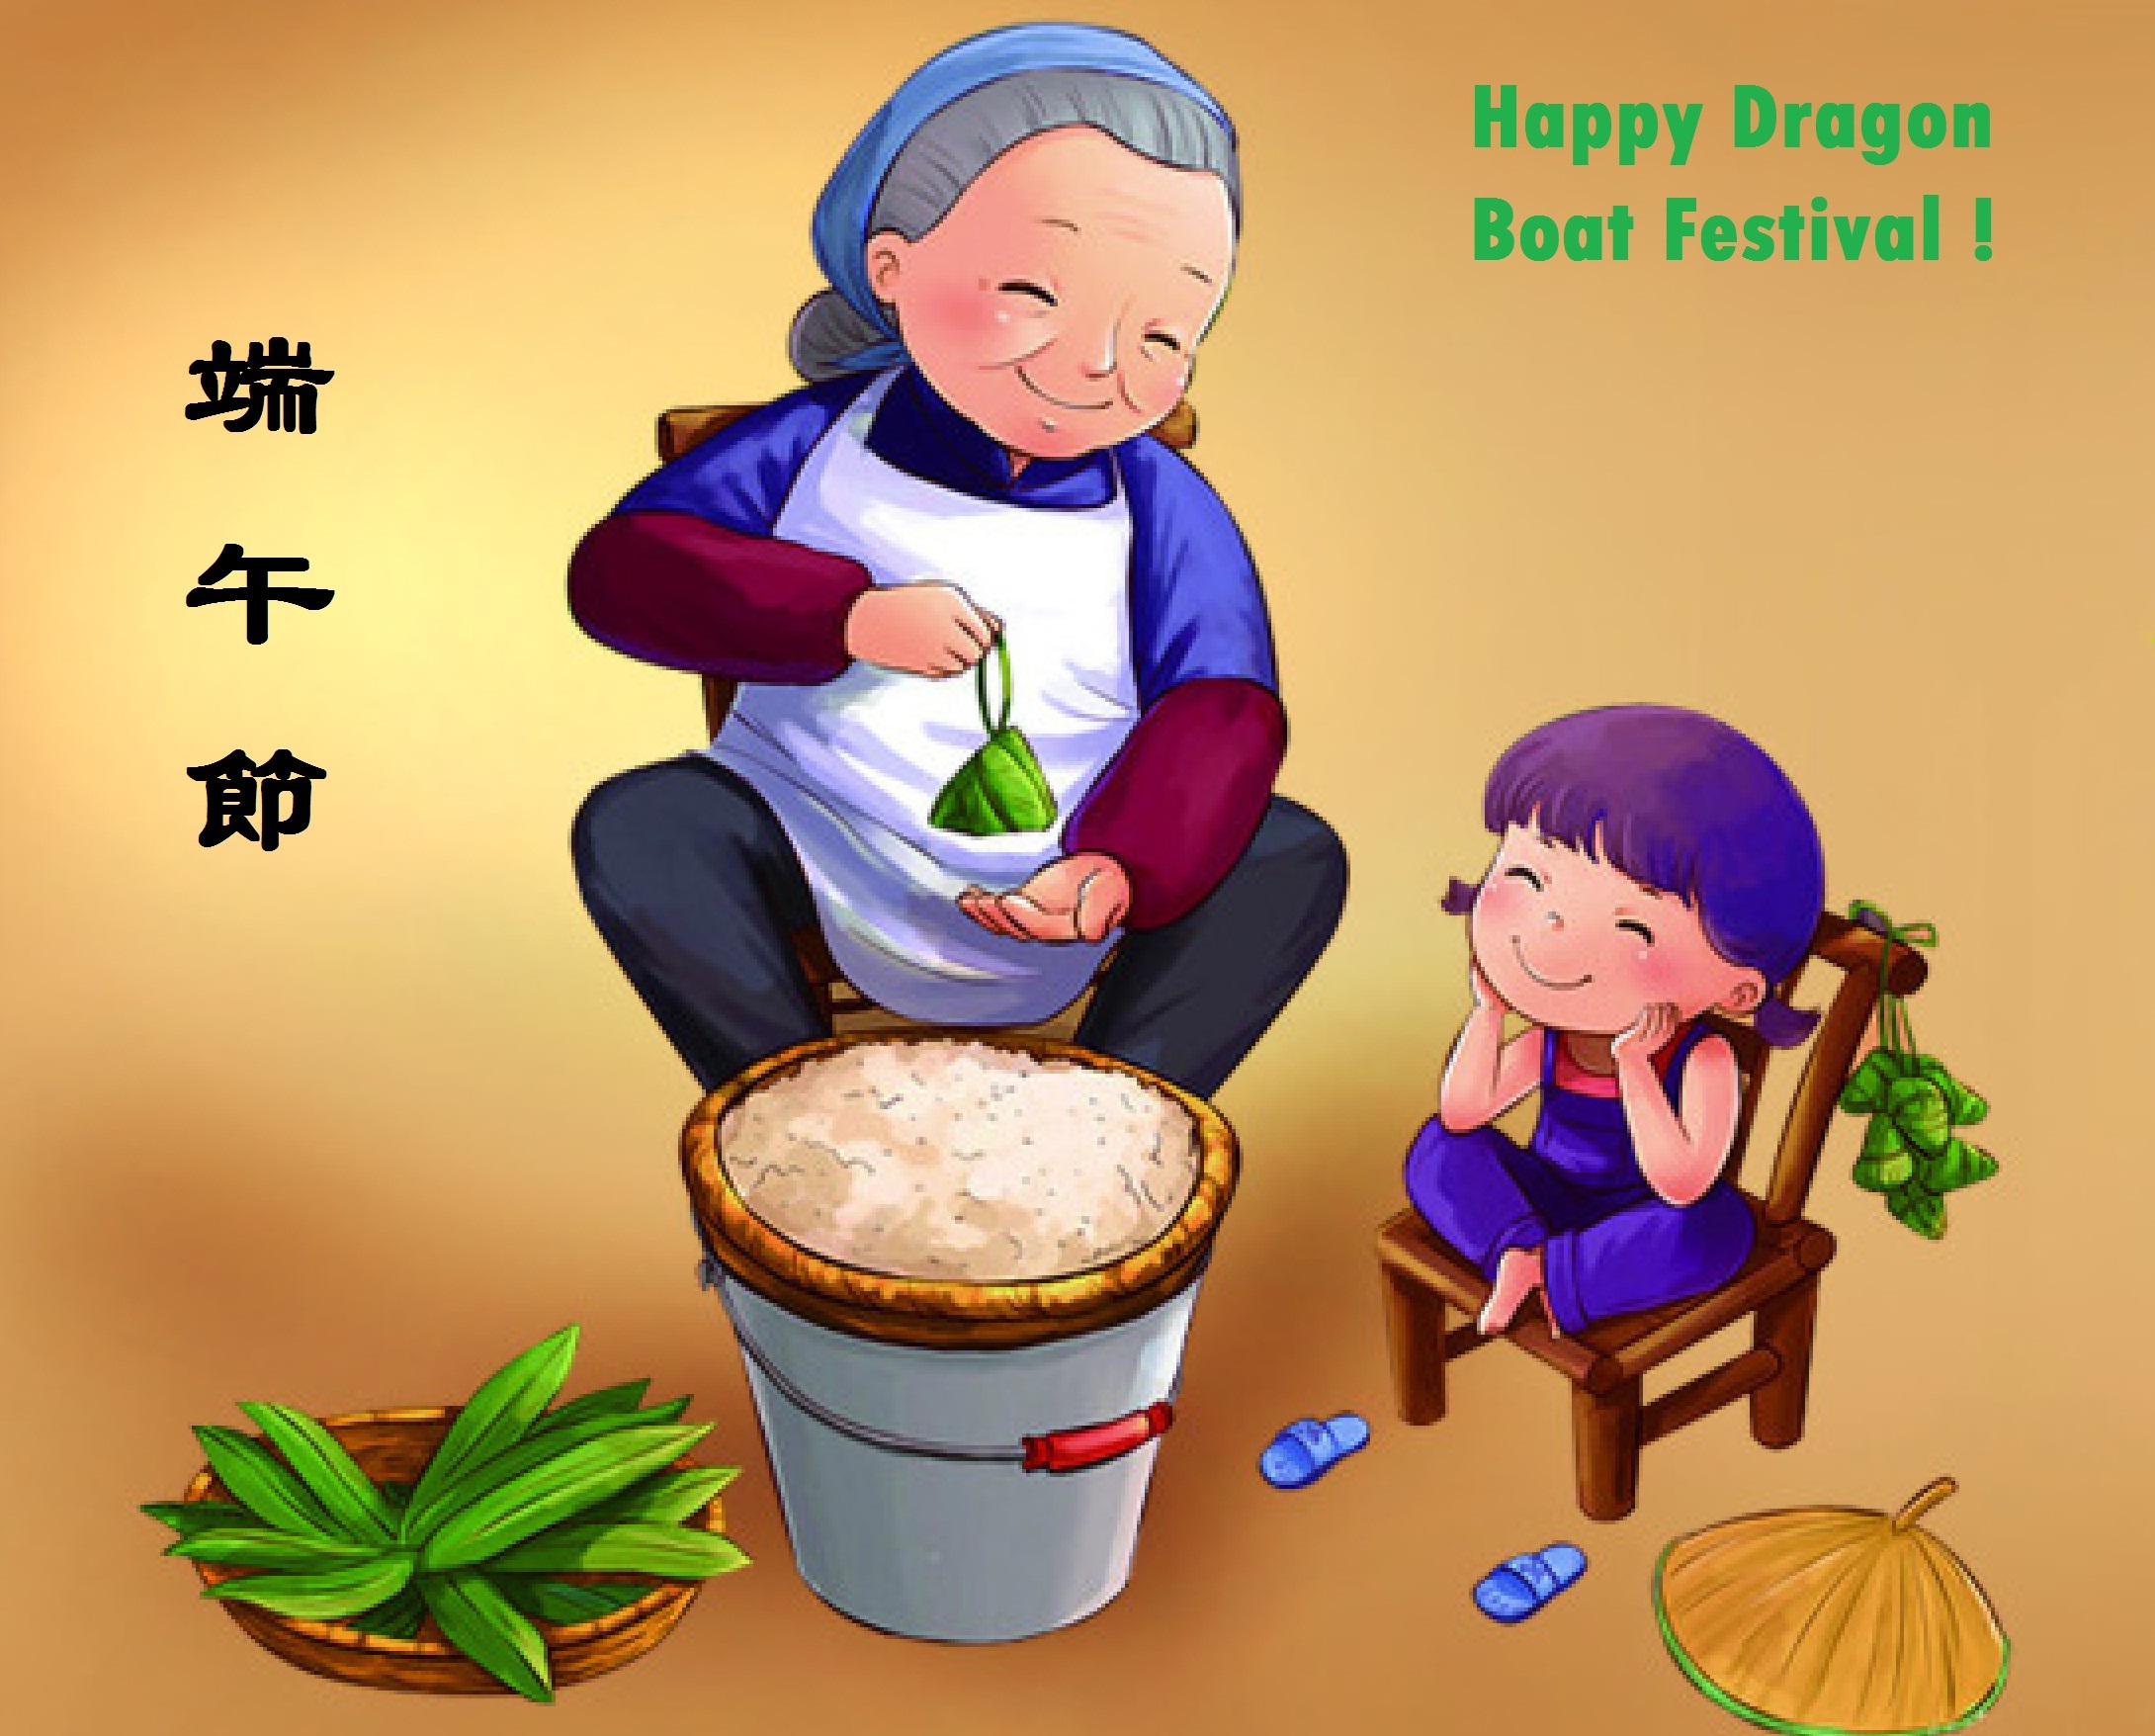 happy dragon boat festival.jpg